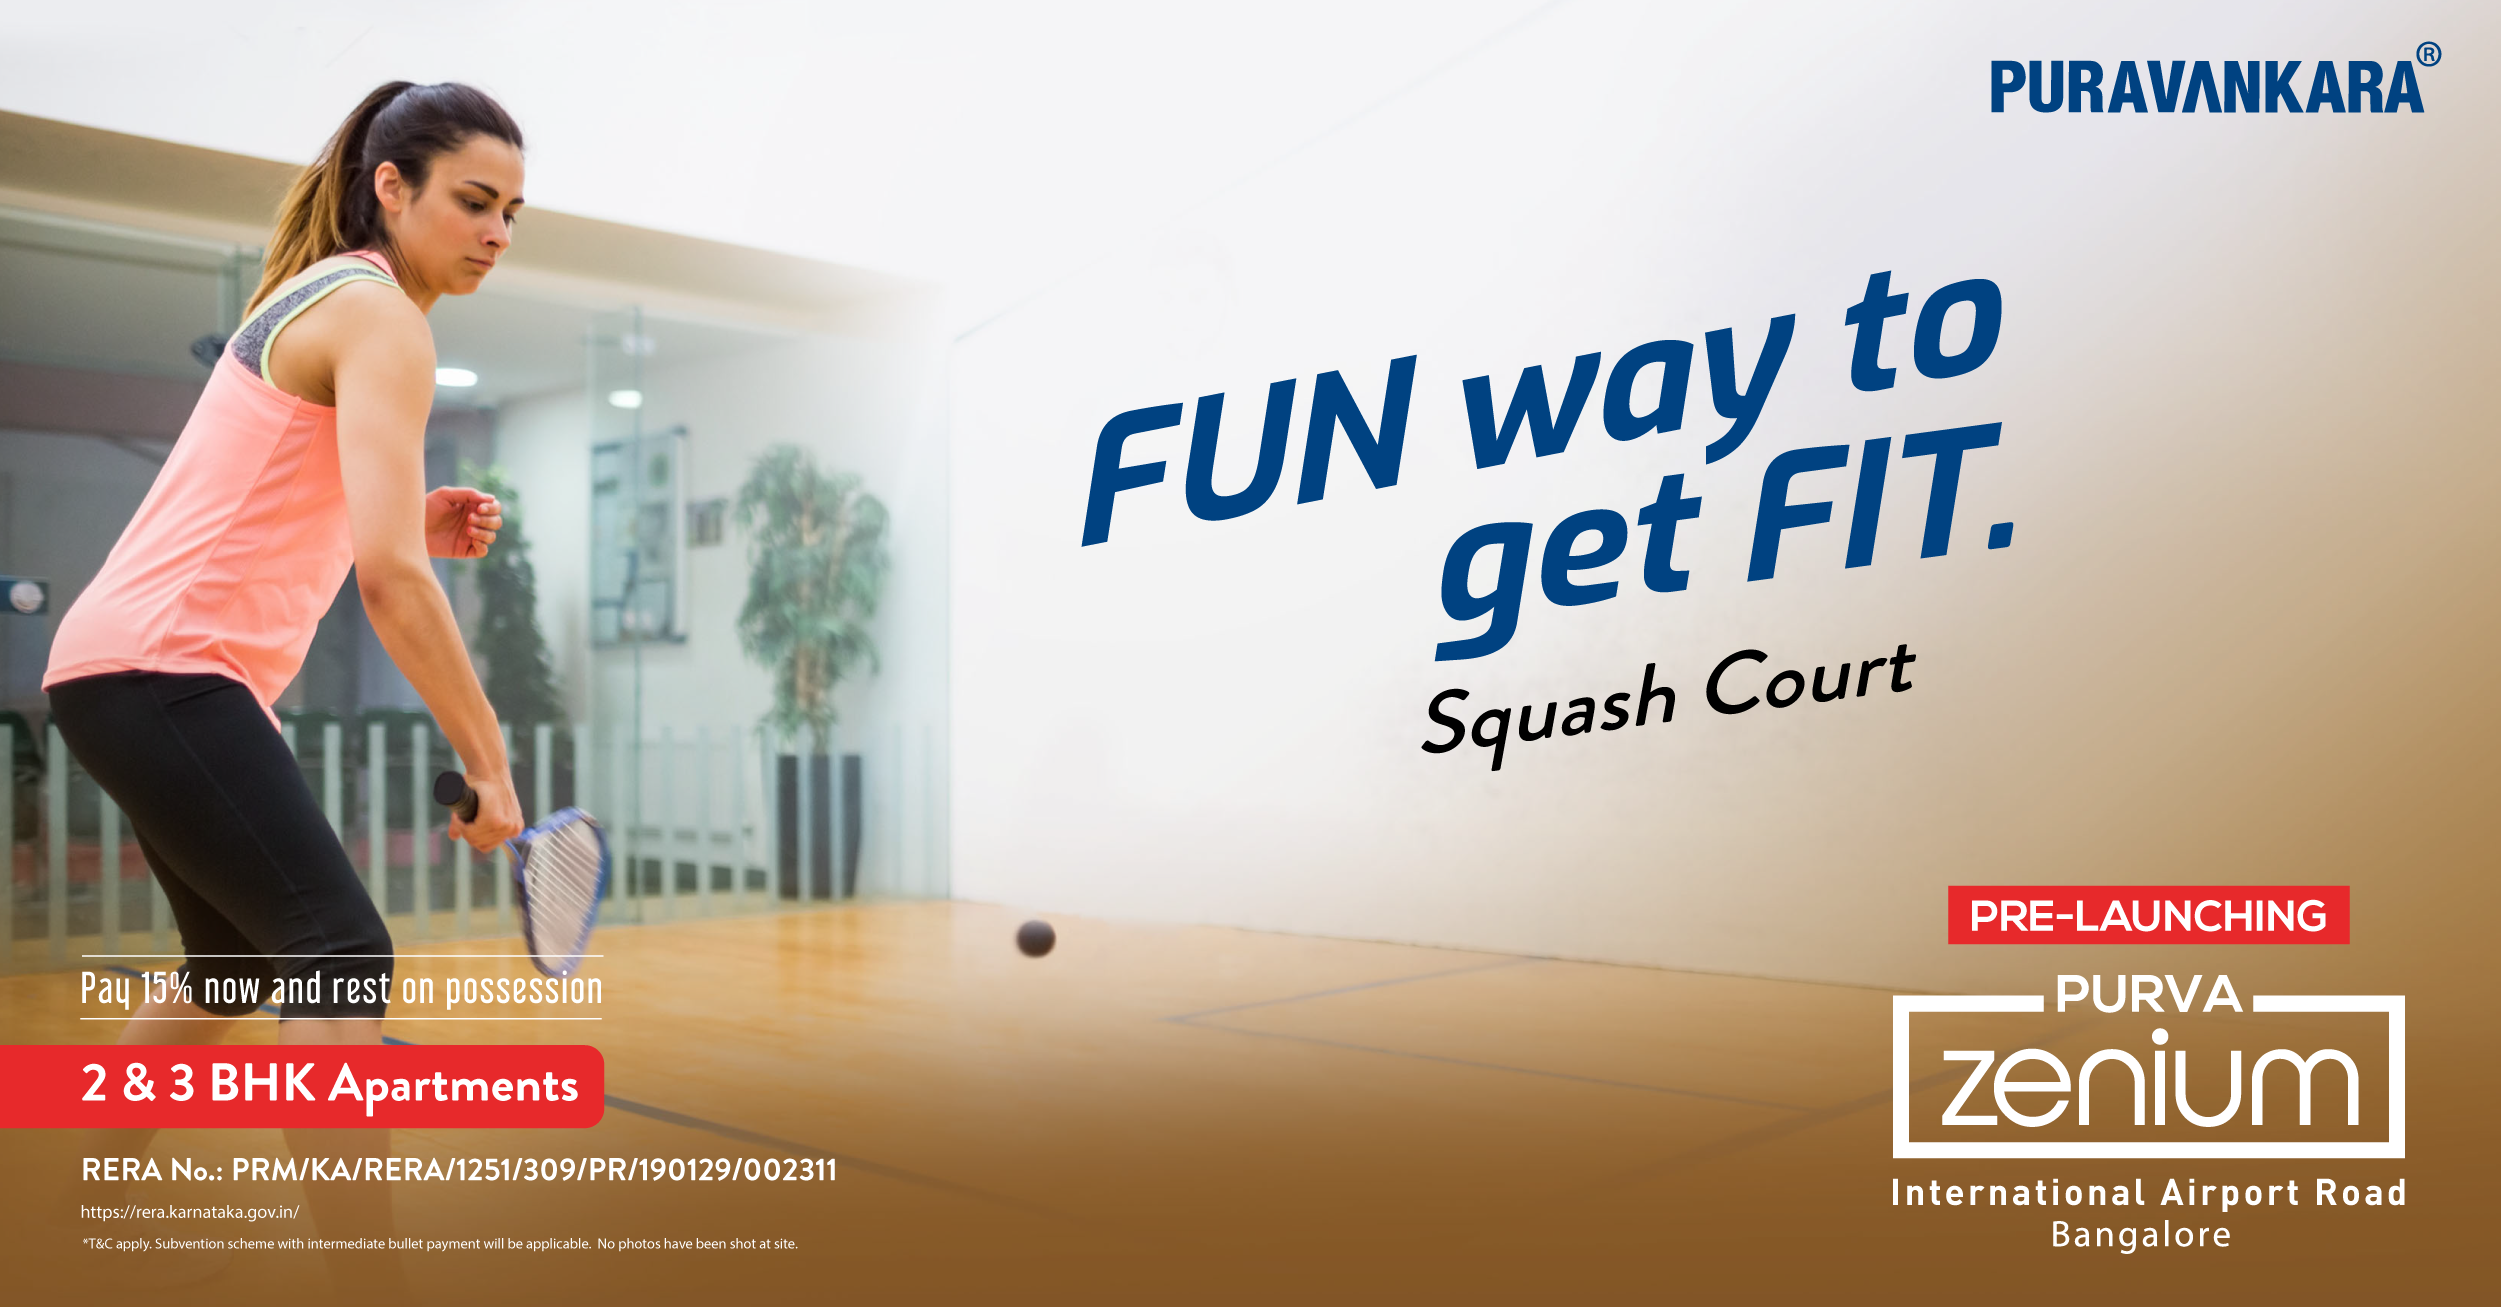 Enjoy Squash Court at Purva Zenium, Bangalore Update